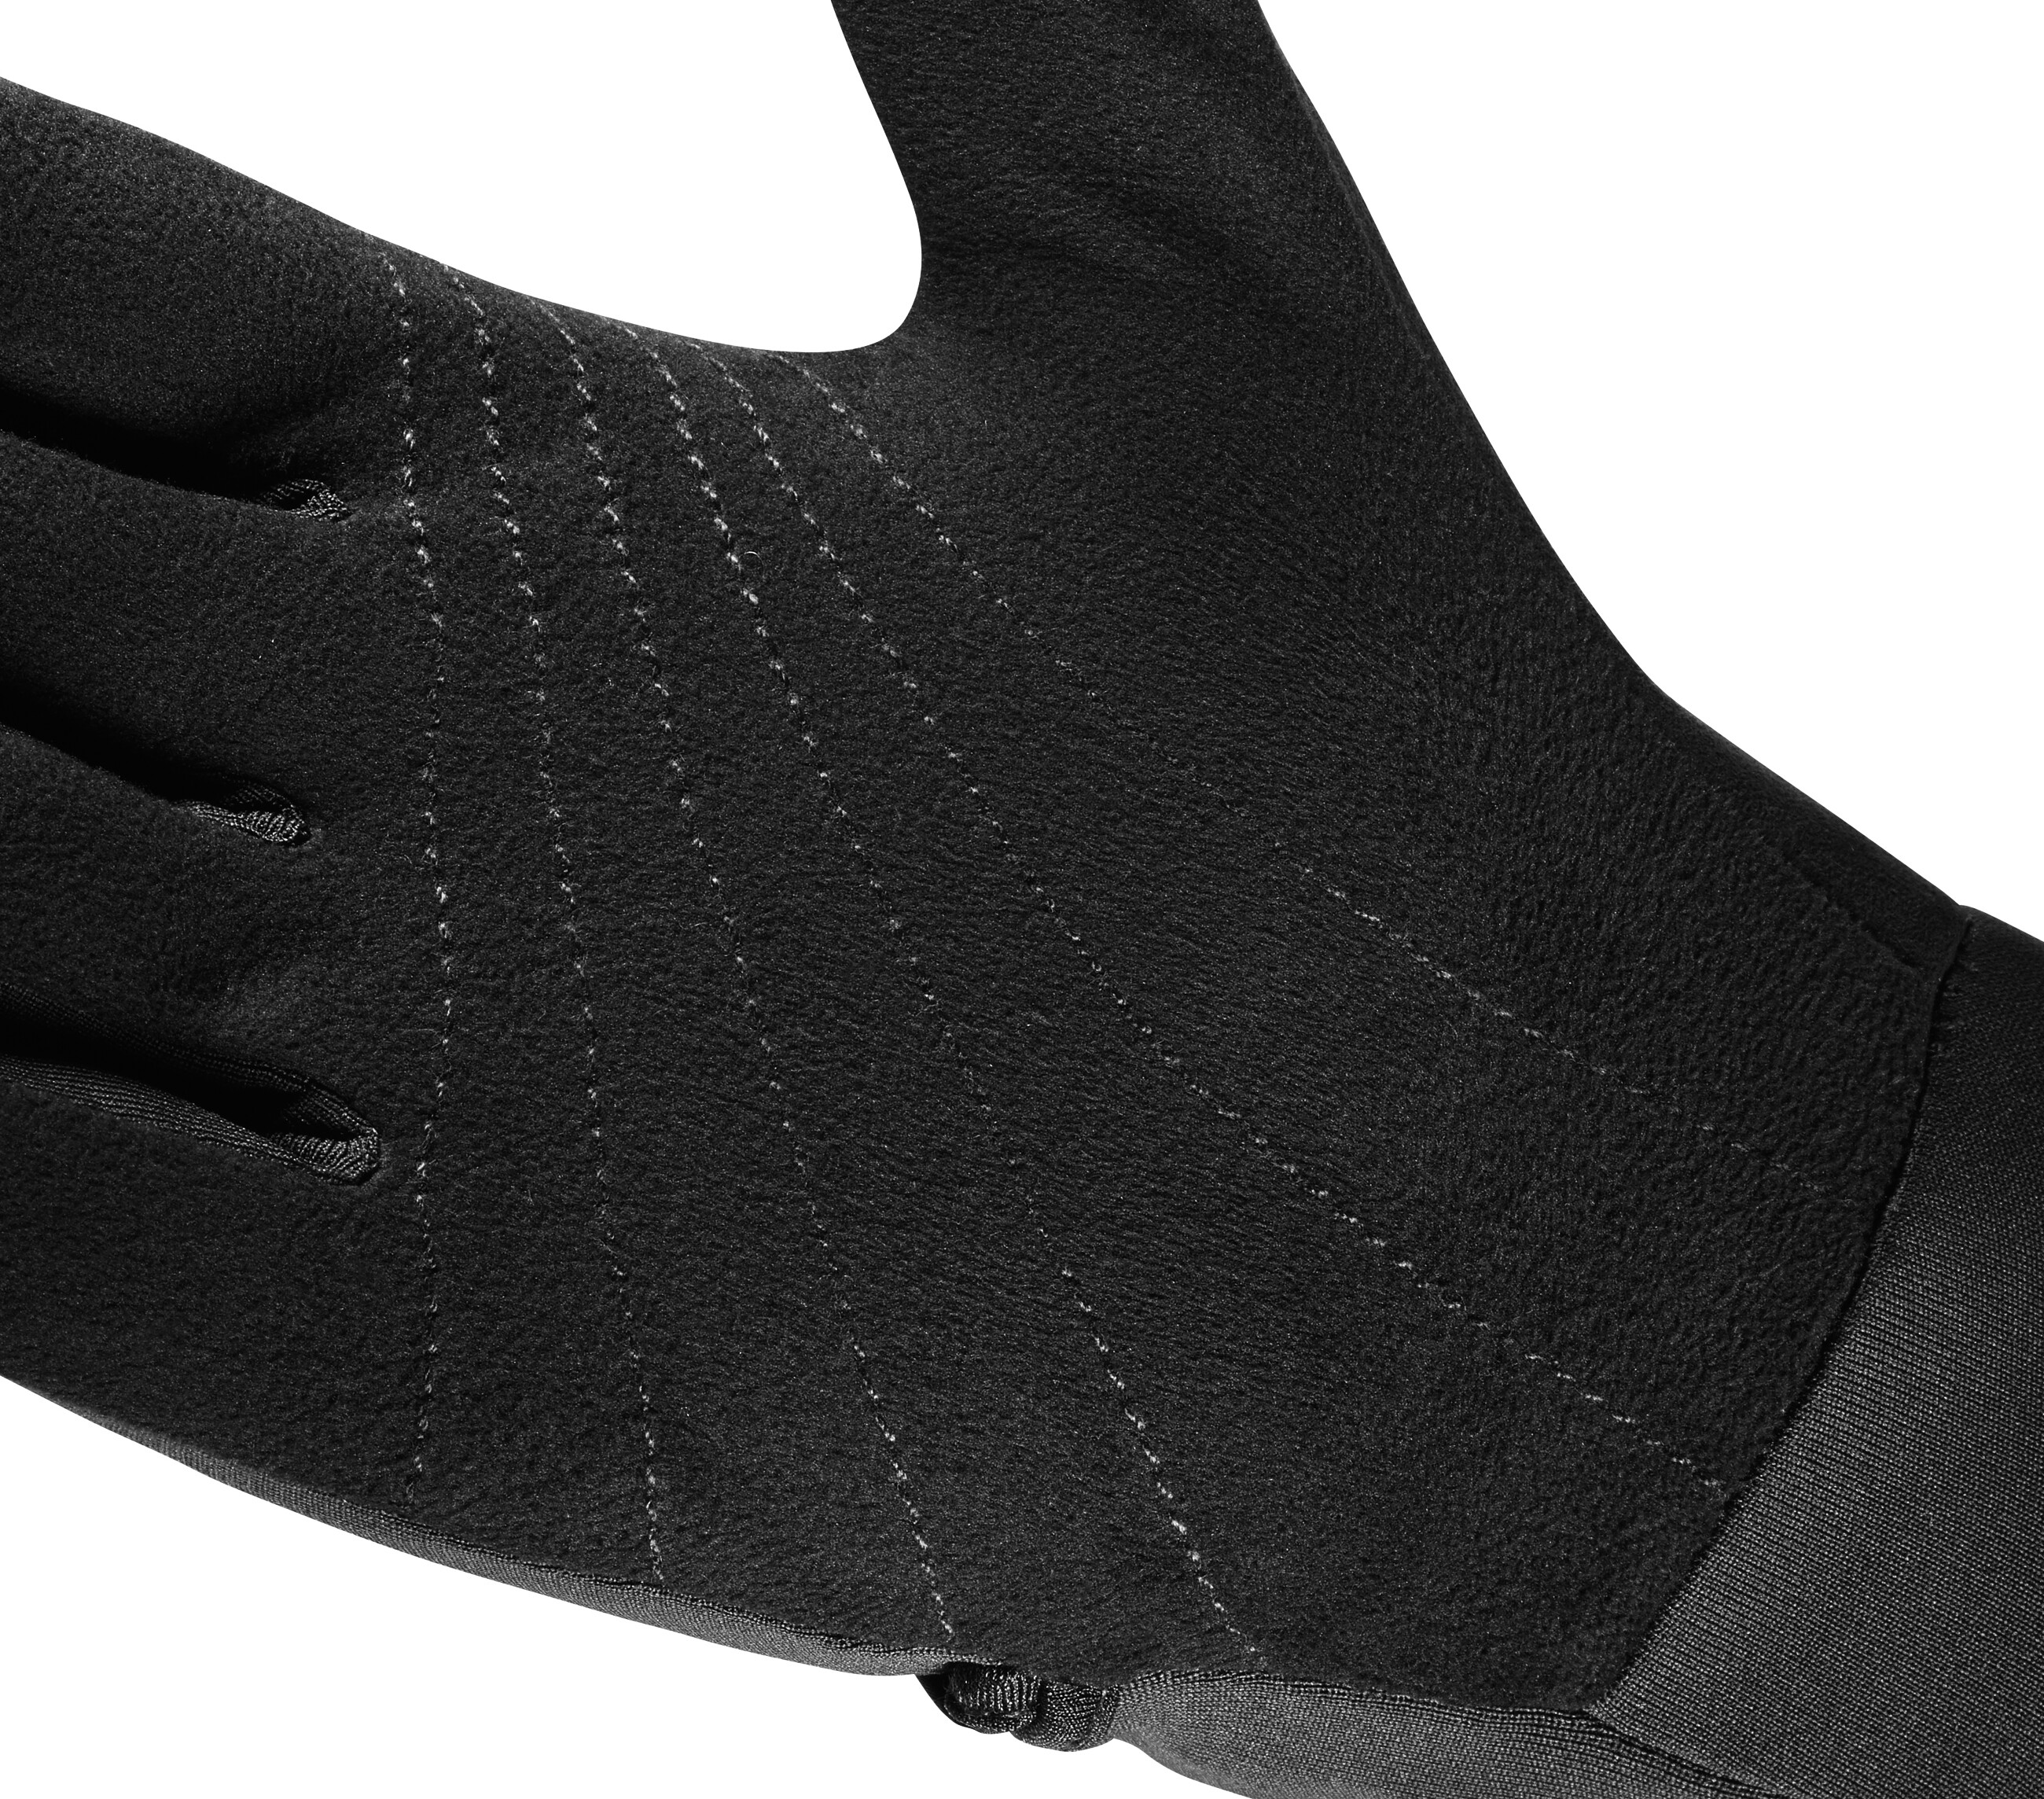 Salomon  Fast Wing Winter Glove Black